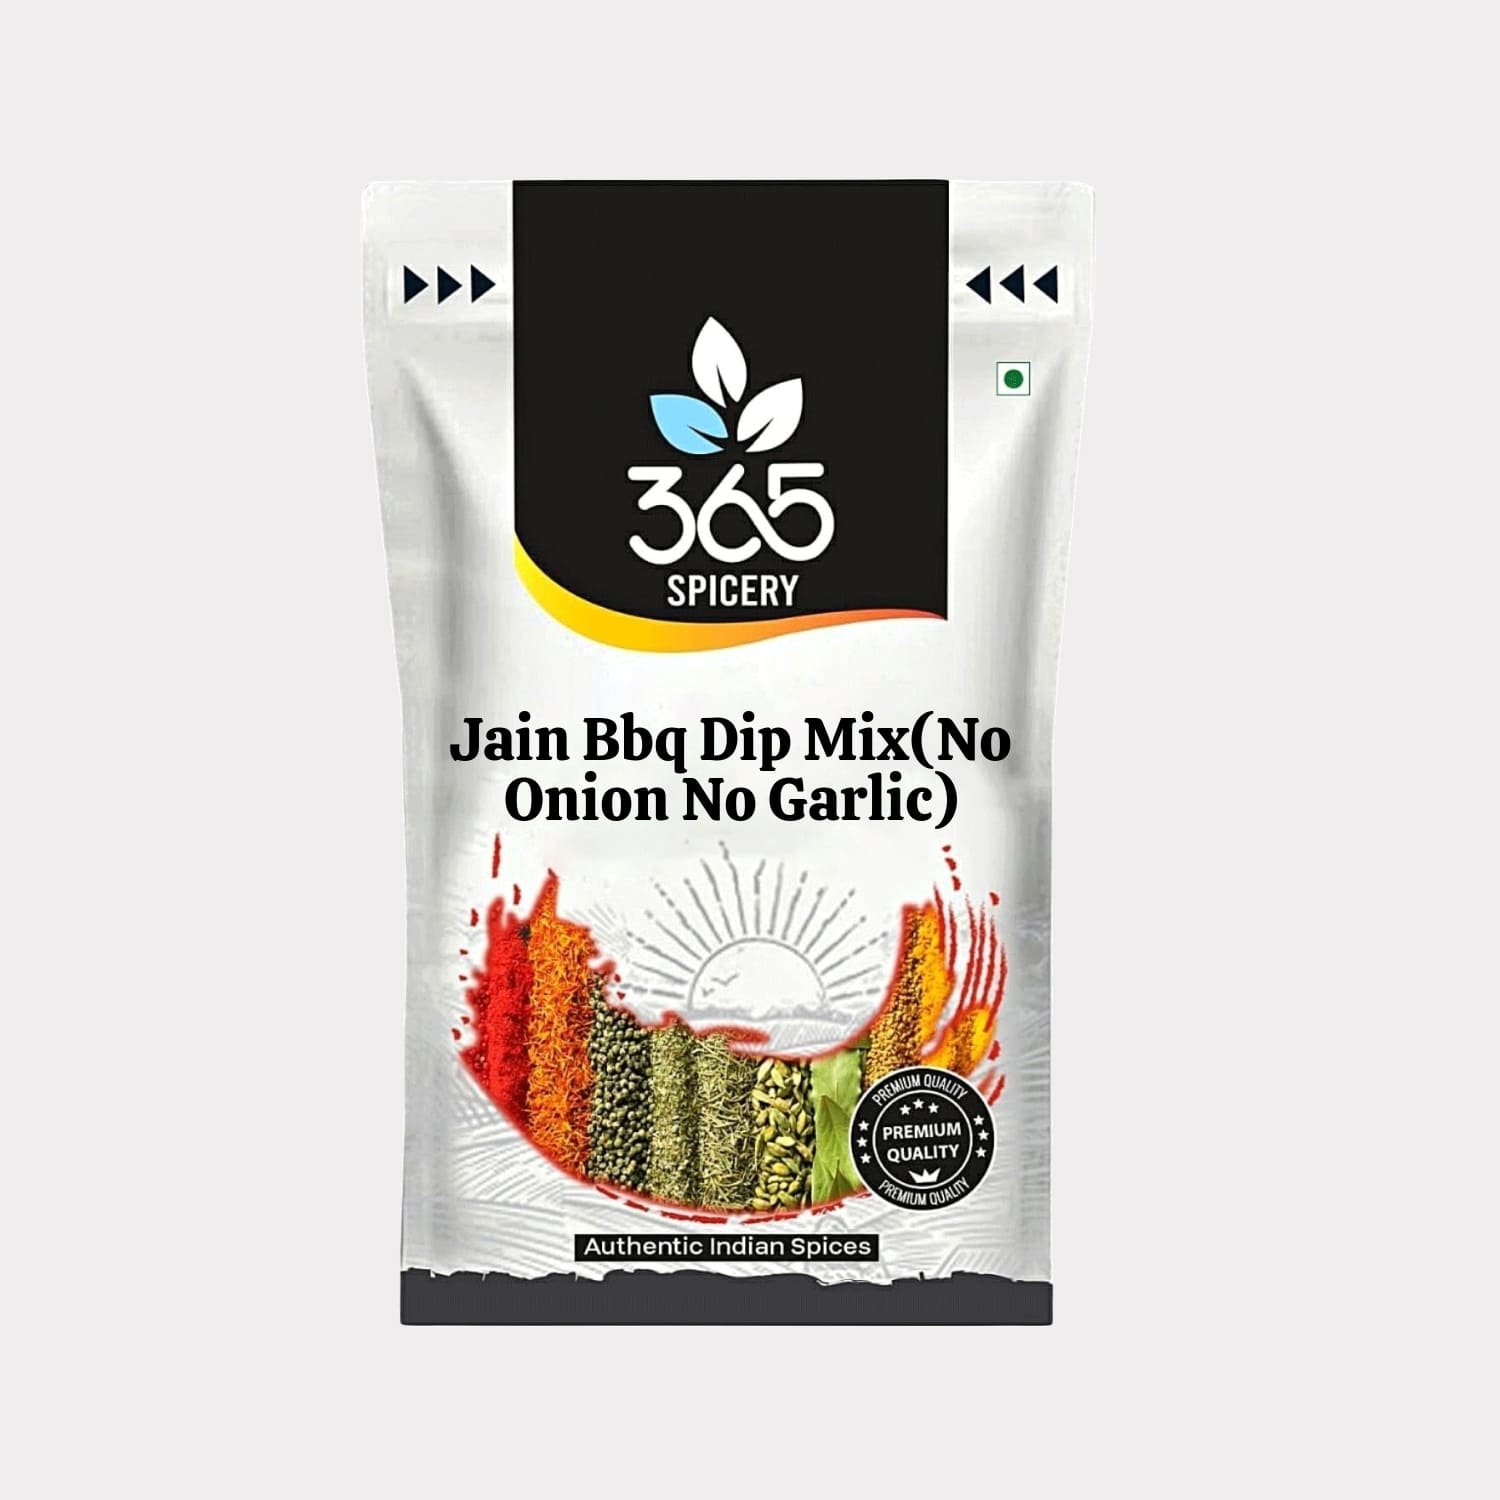 Jain Bbq Dip Mix(No Onion No Garlic)